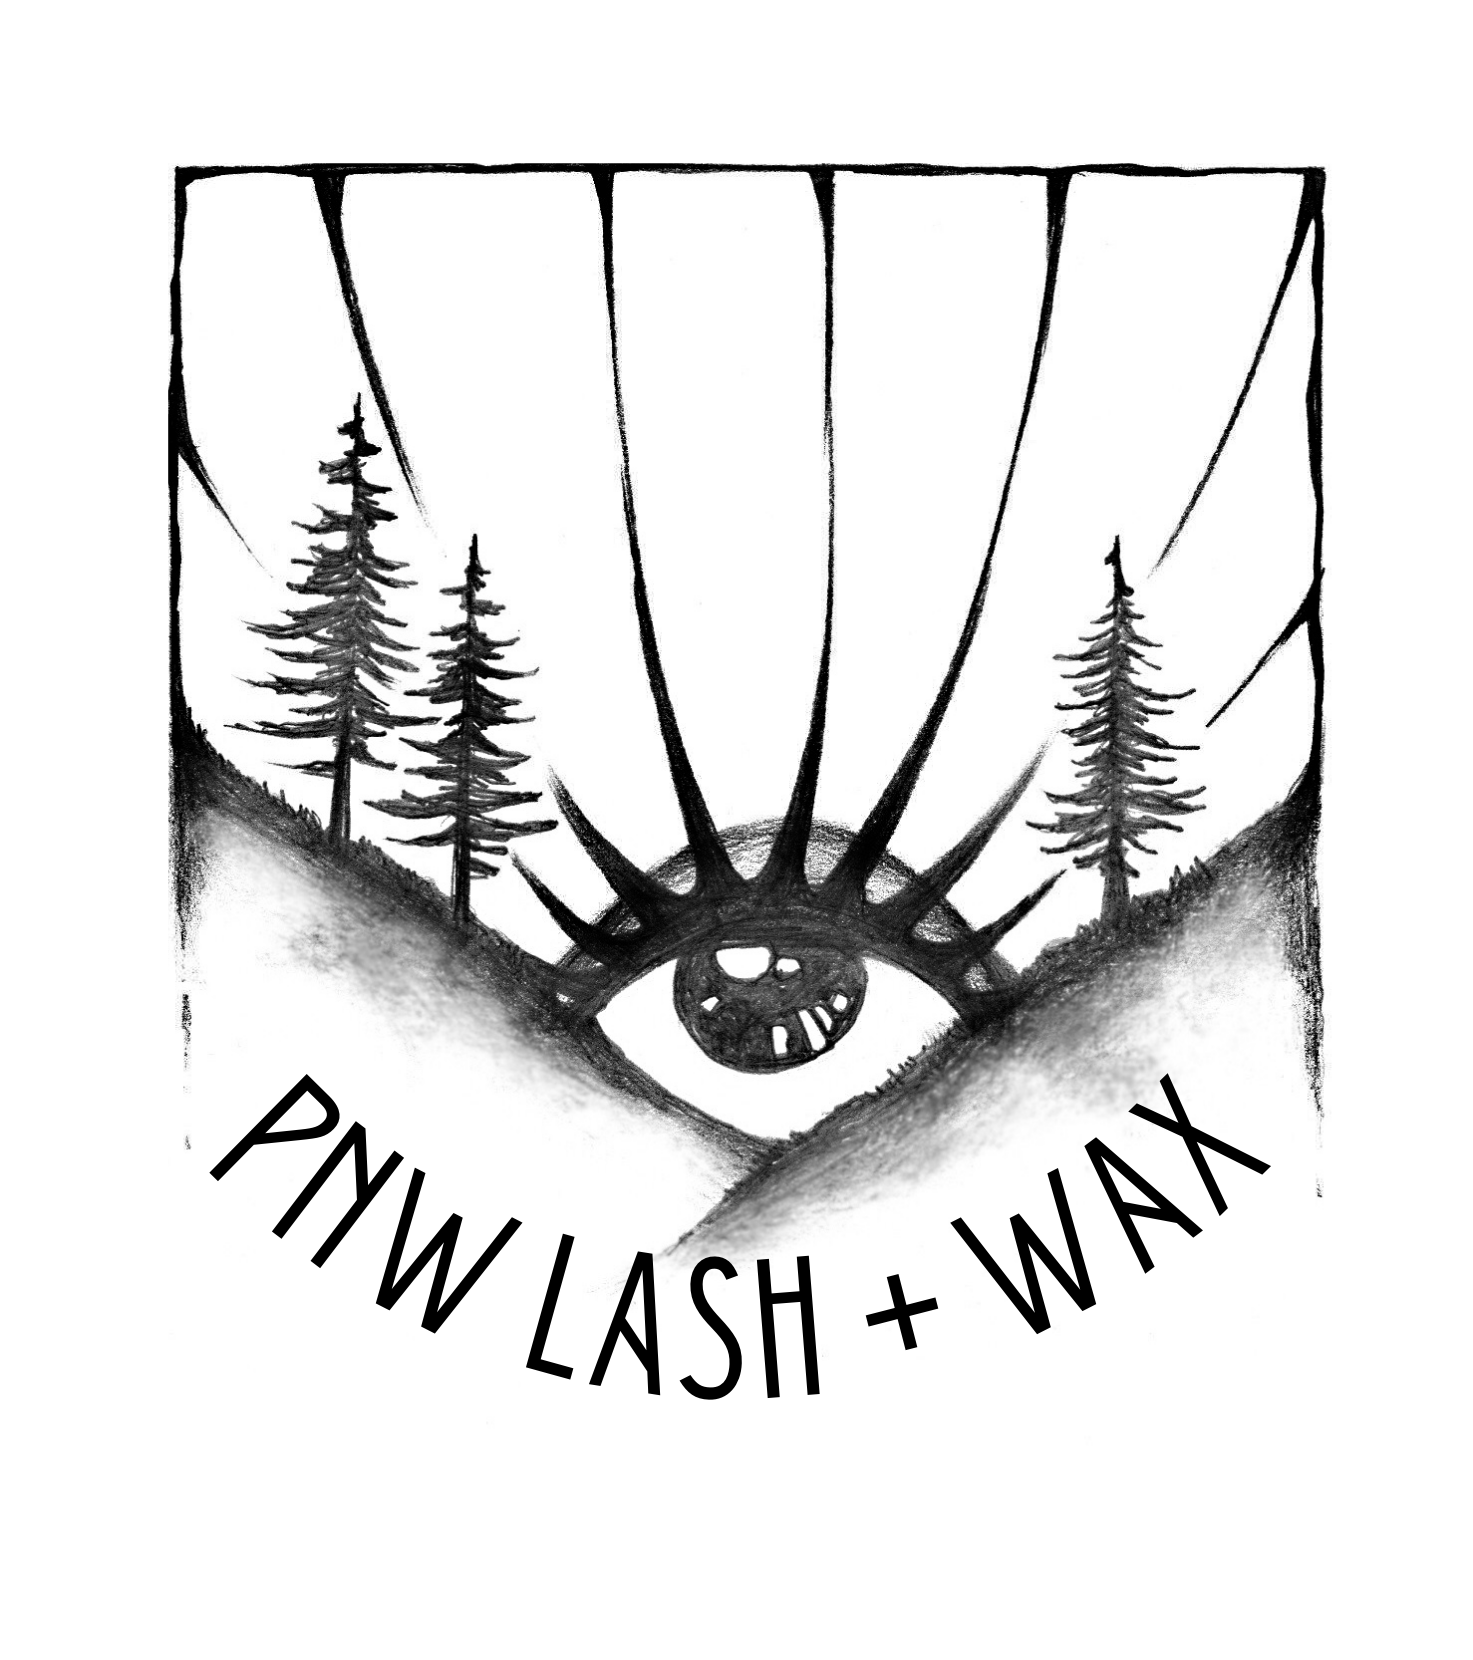 PNW Lash + Wax